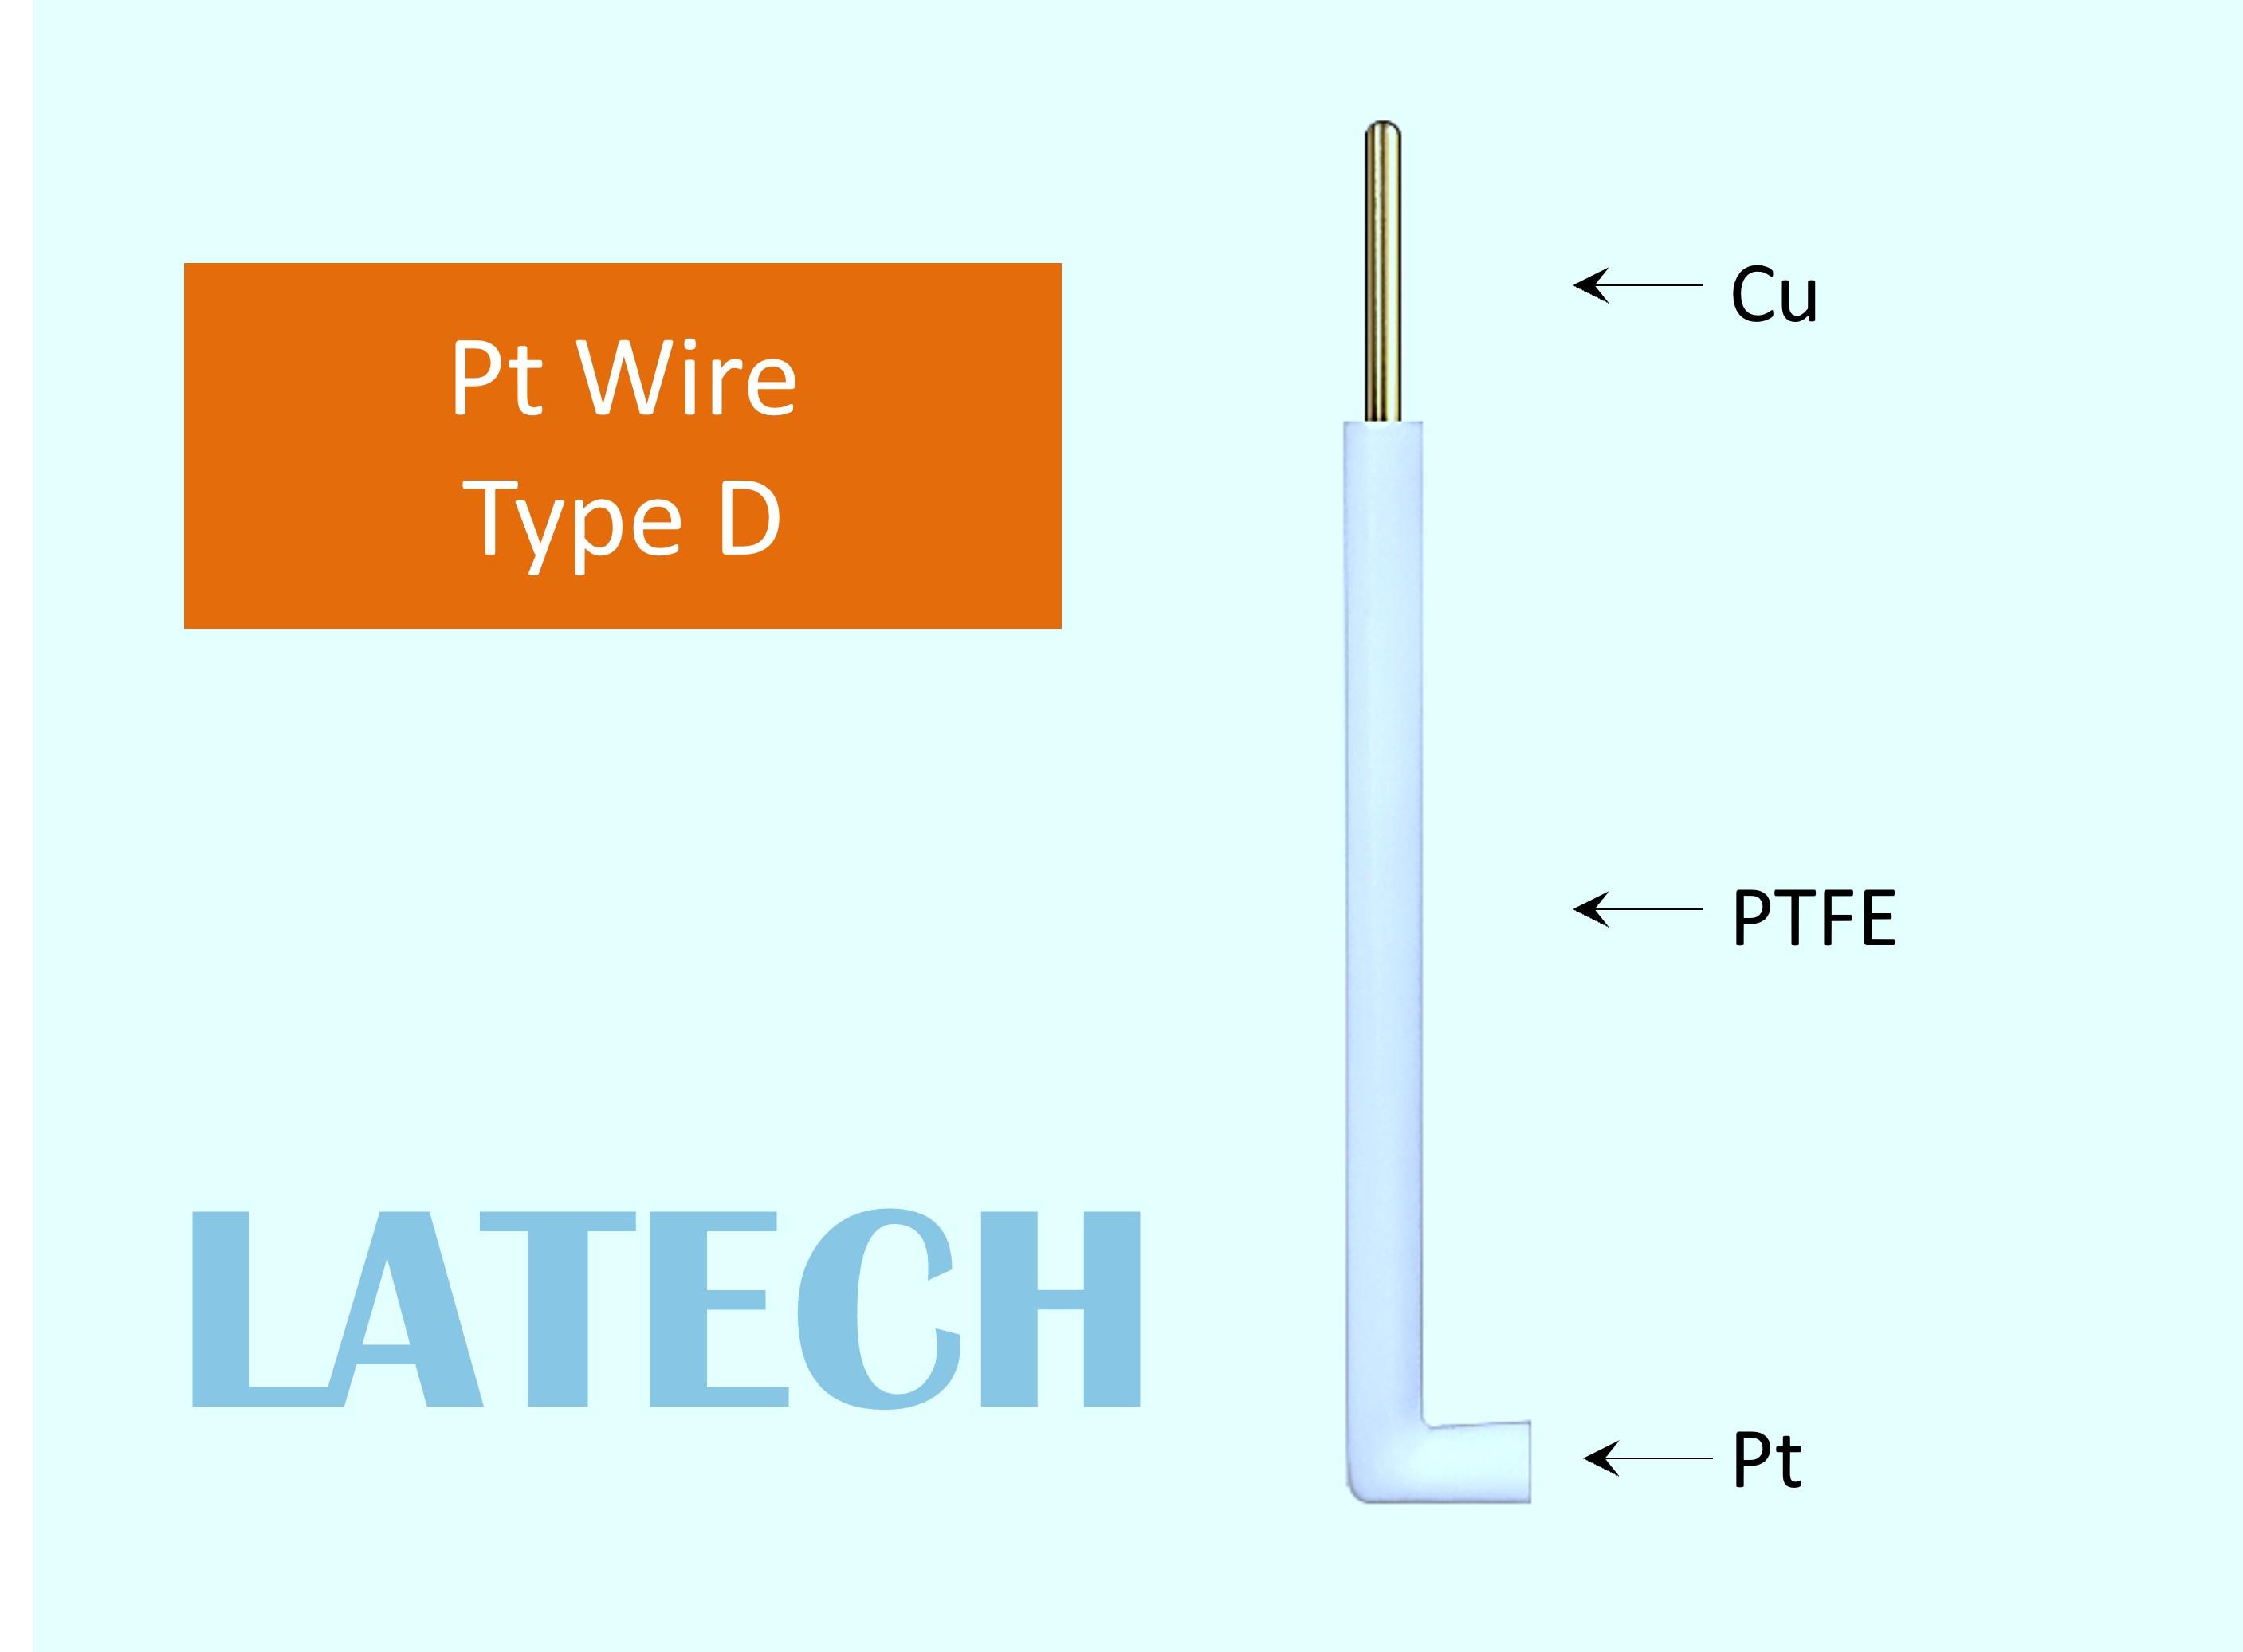 Pt wire Type D Latech.jpg